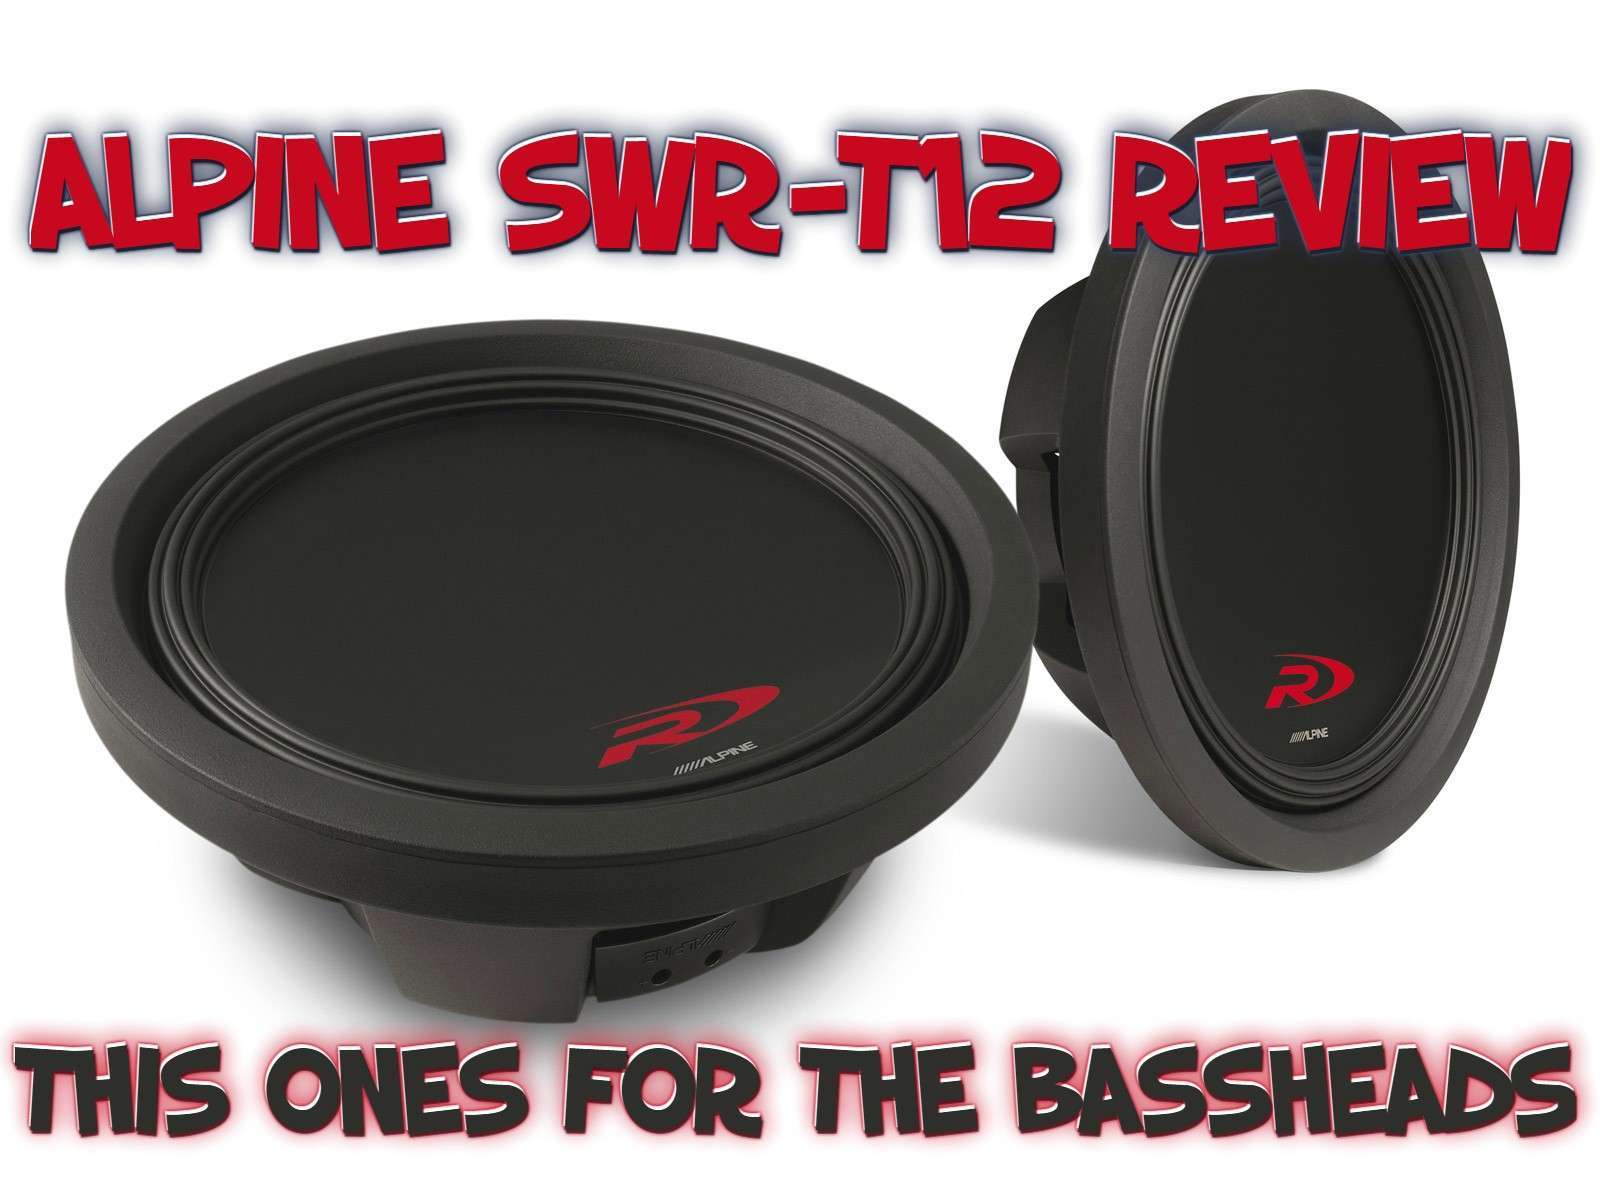 Alpine SWR-T12 Review